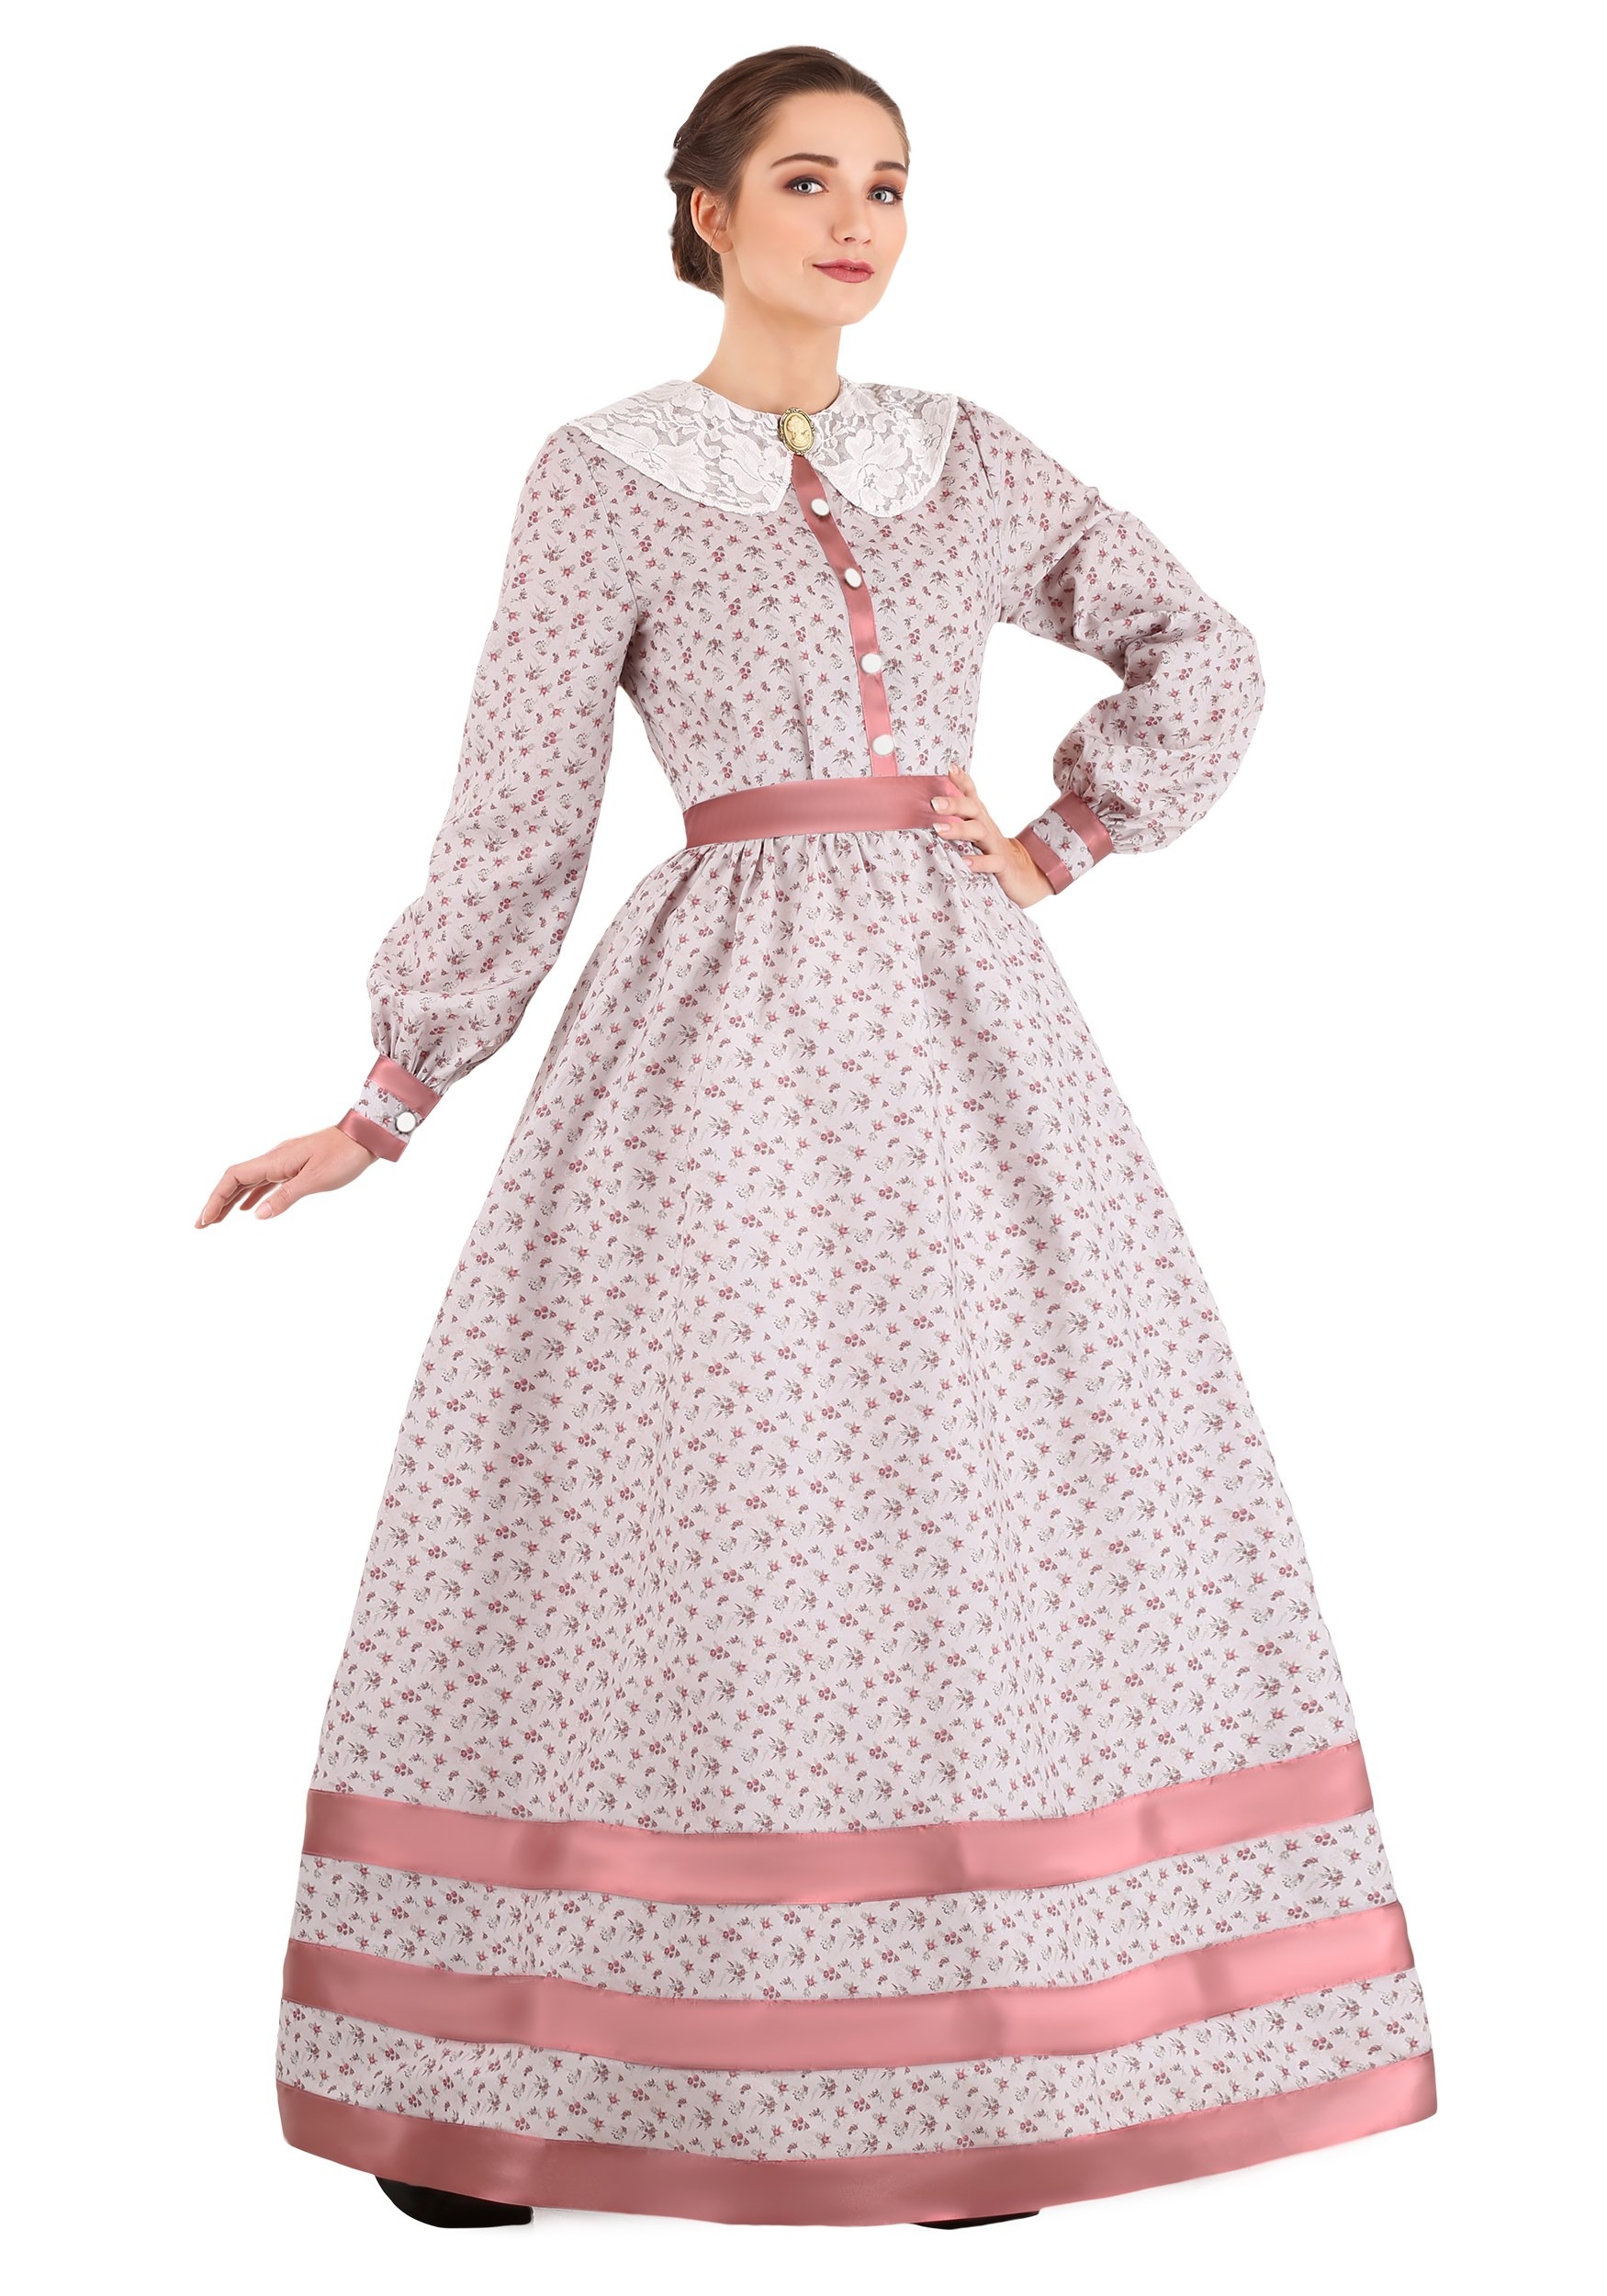 Women’s Civil War Dress Costume